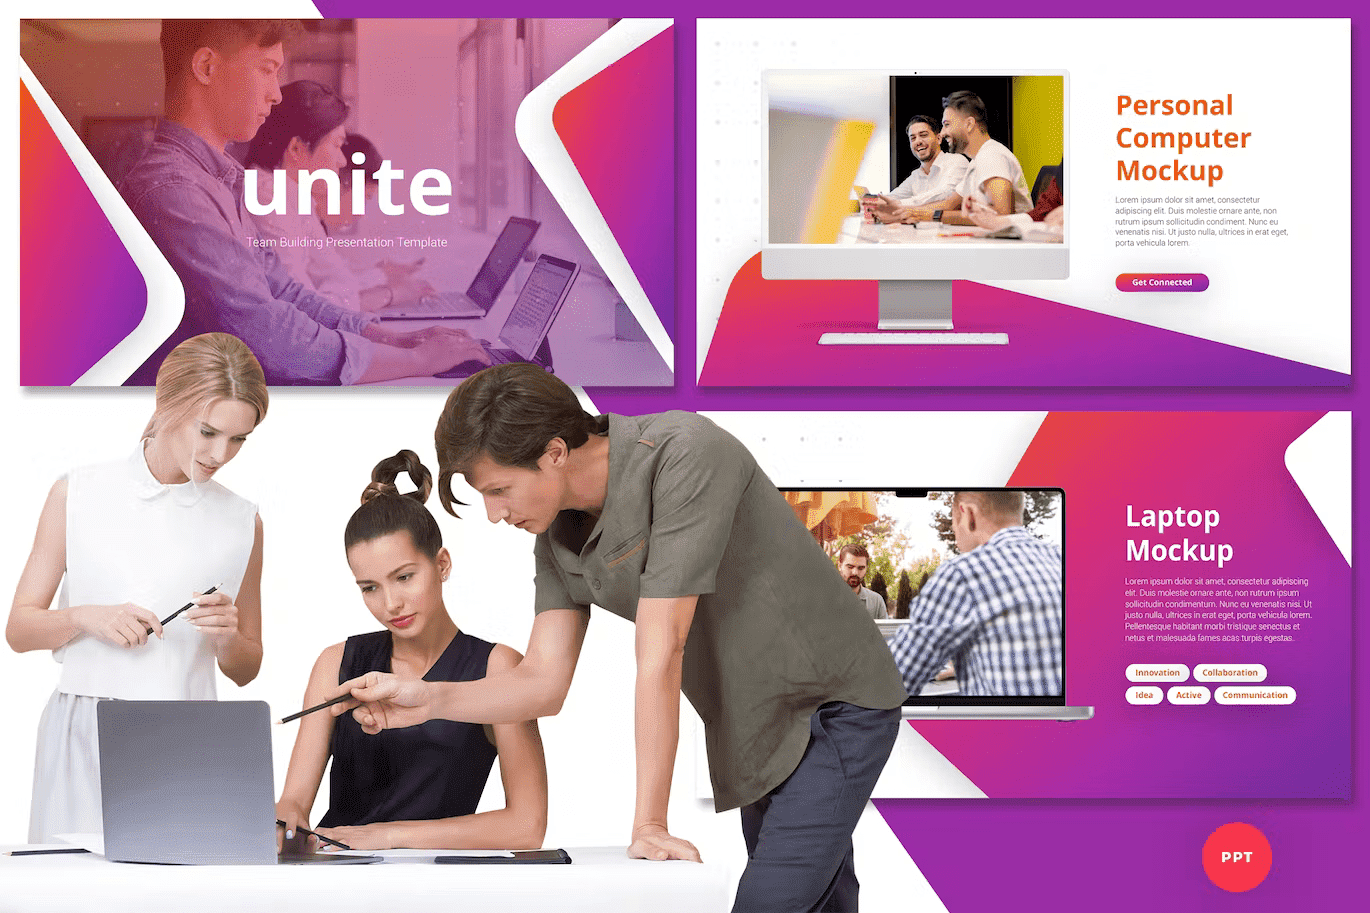 3 big slides team building powerpoint presentation template: unite, Personal Computer Mockup, Laptop Mockup.